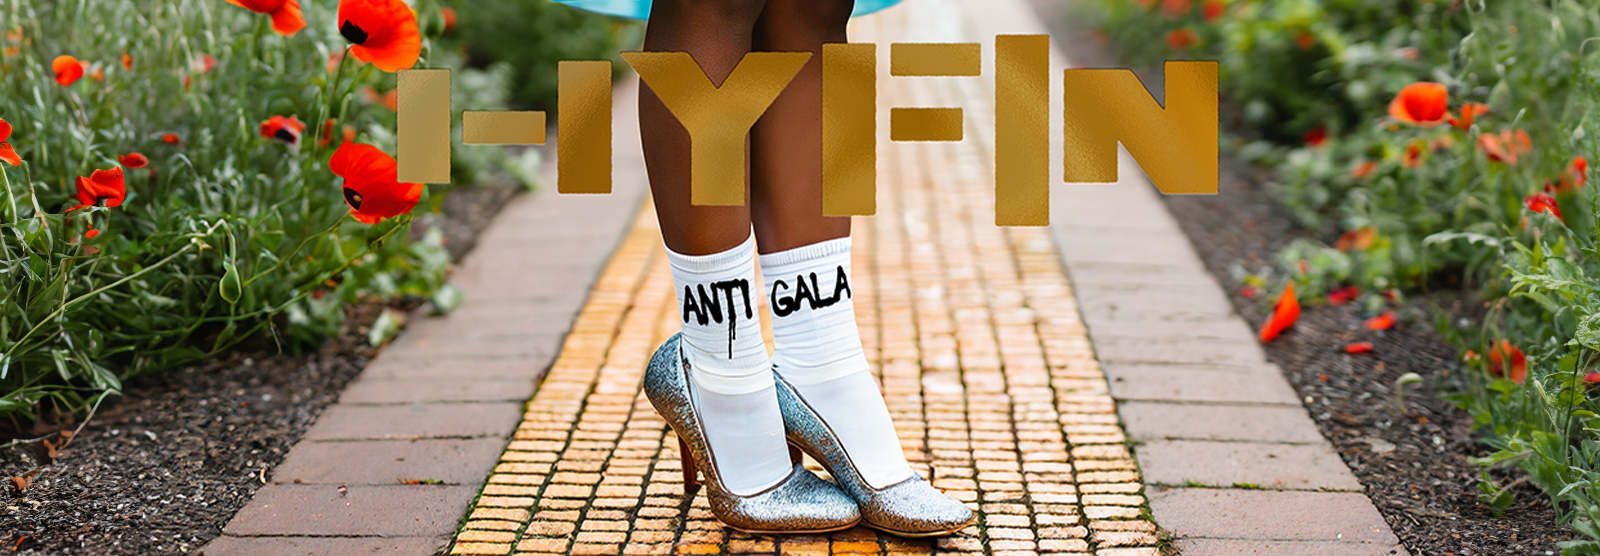 HYFIN Anti-Gala – The Wiz